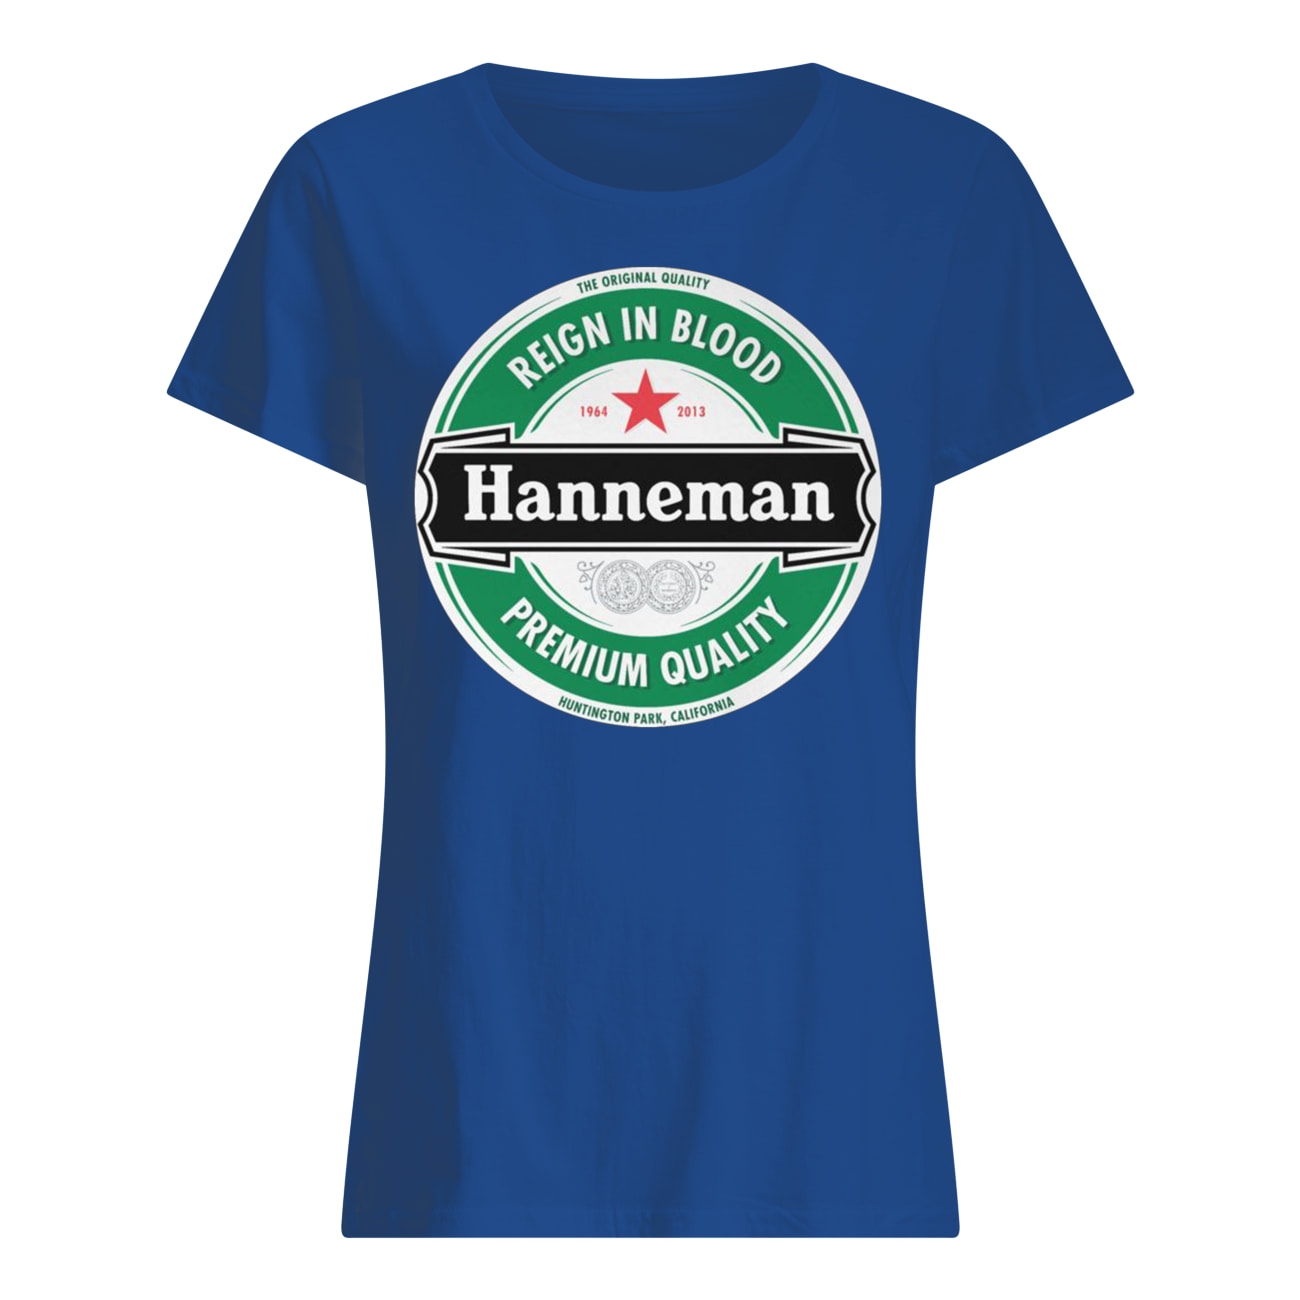 The original quality reign in blood hanneman premium quality womens shirt